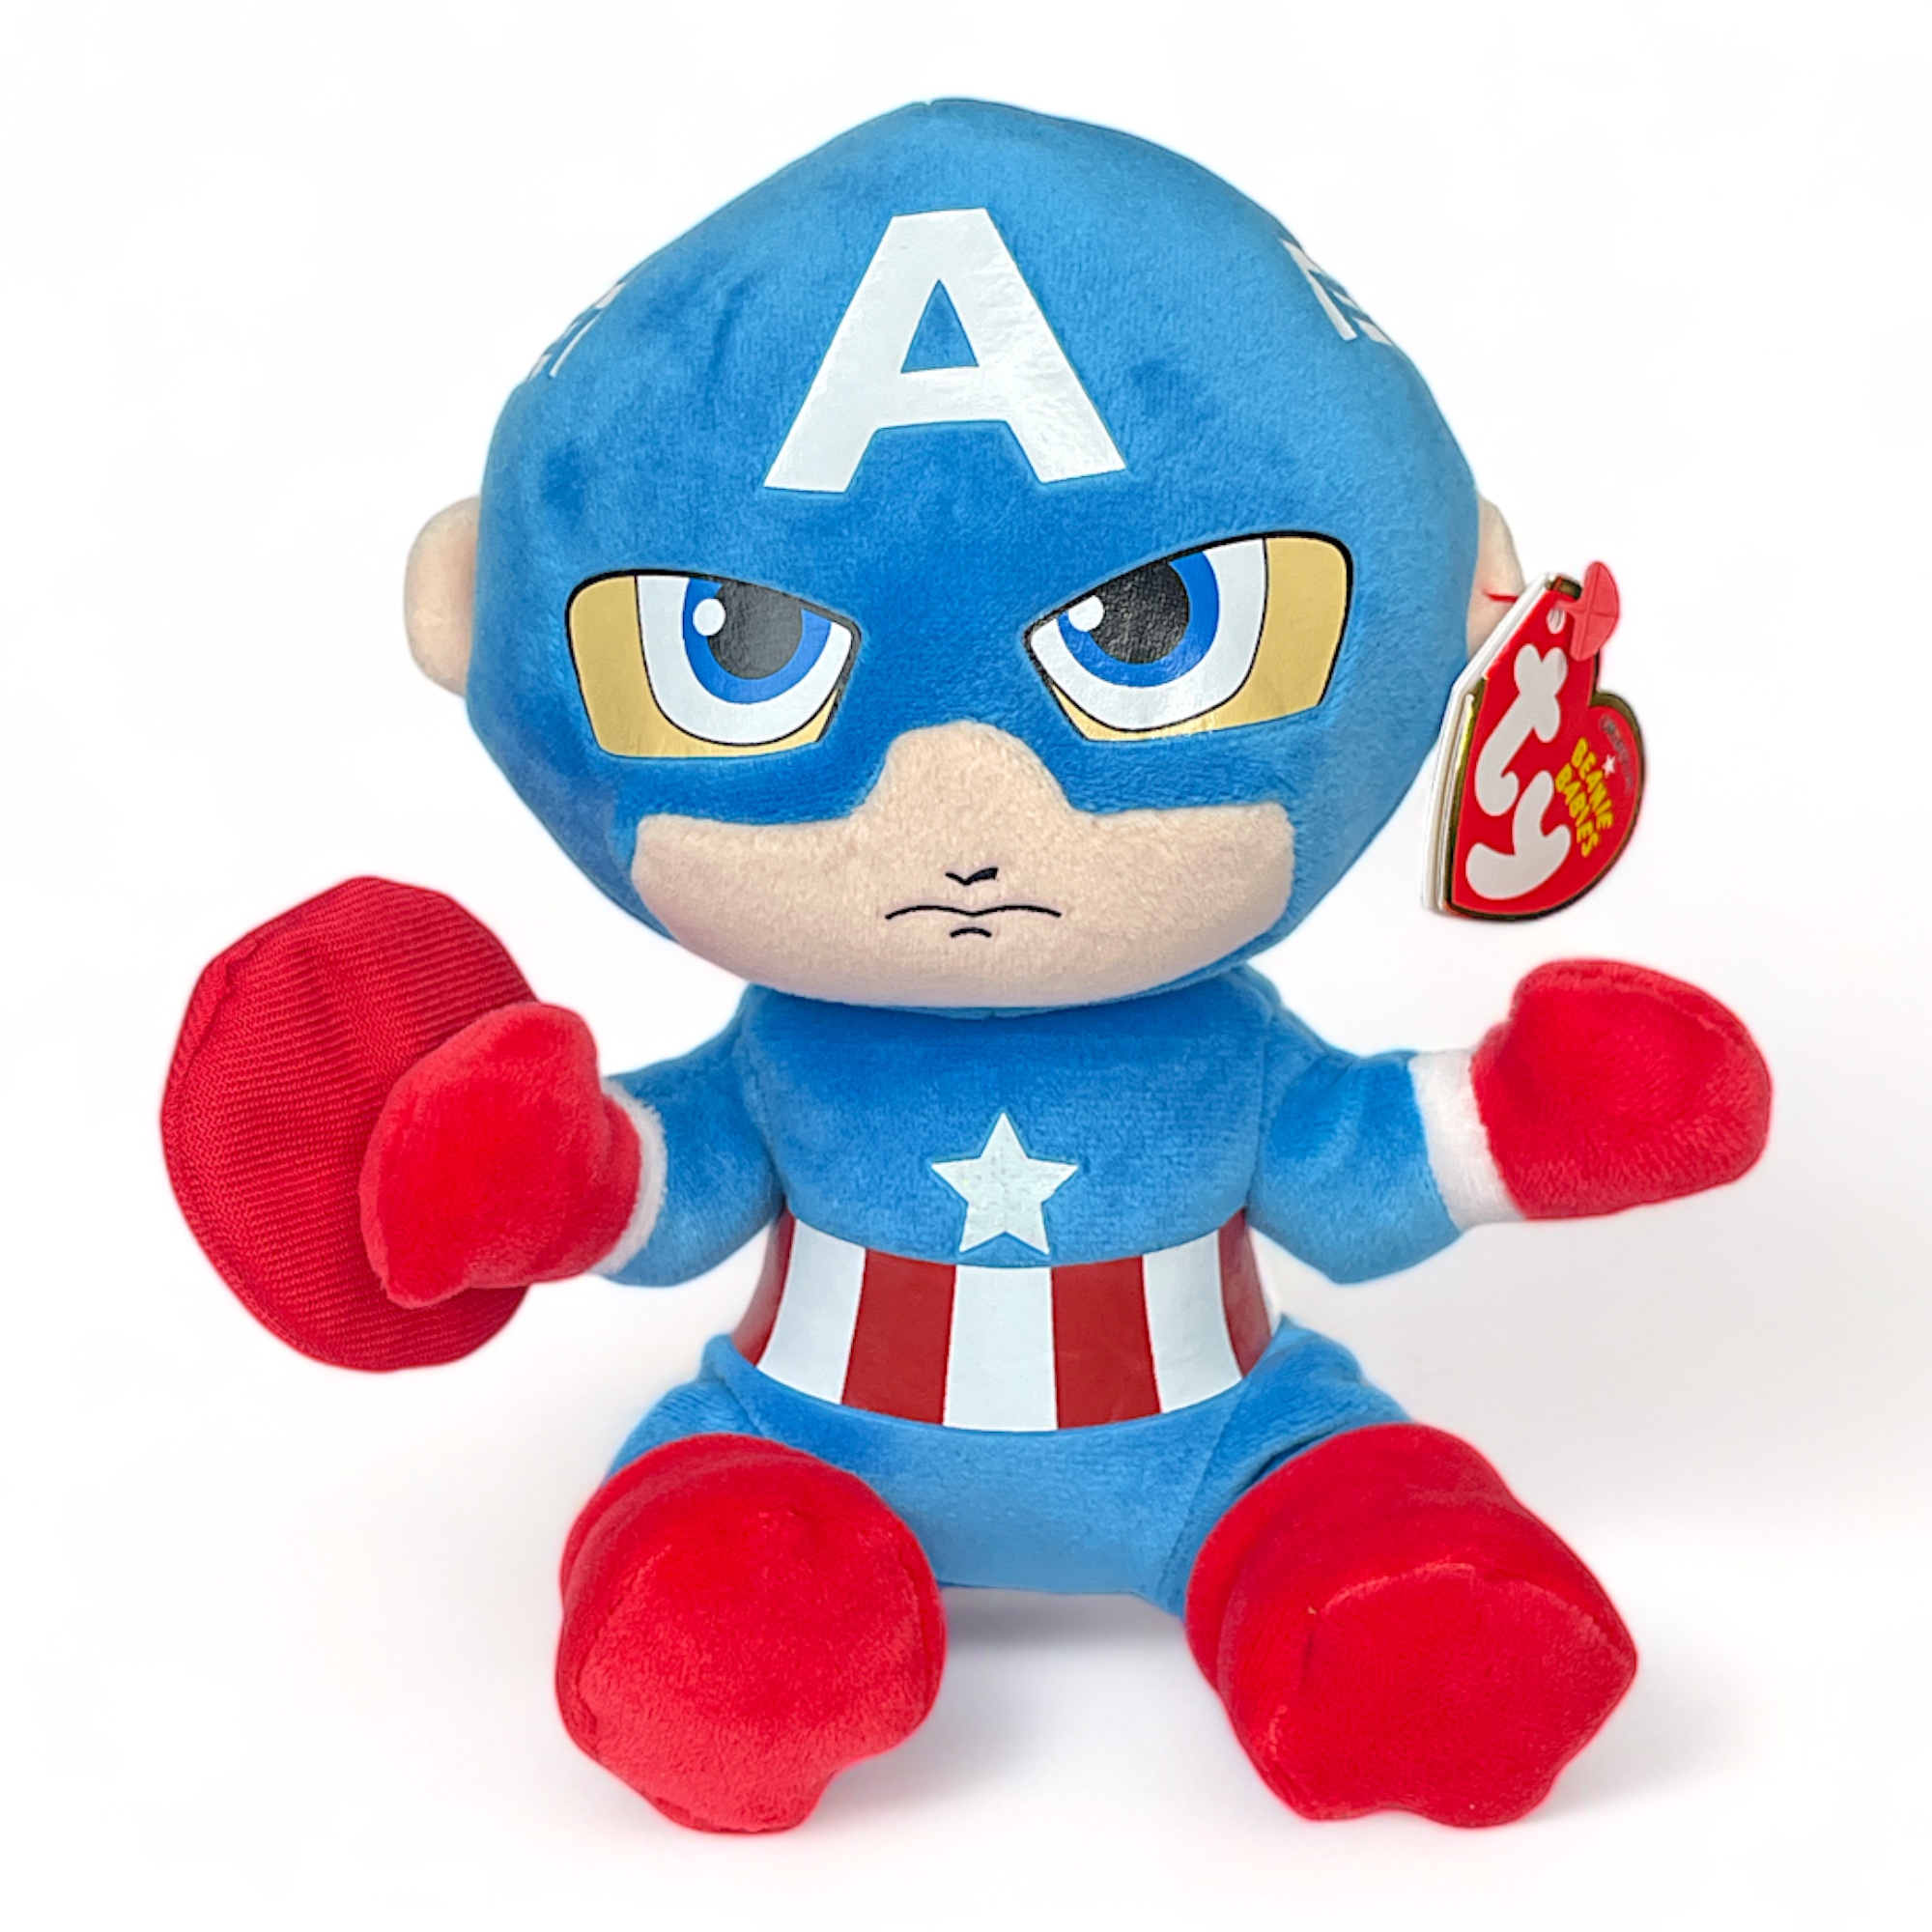 Captain America Plüschfigur (18 cm) - Marvel